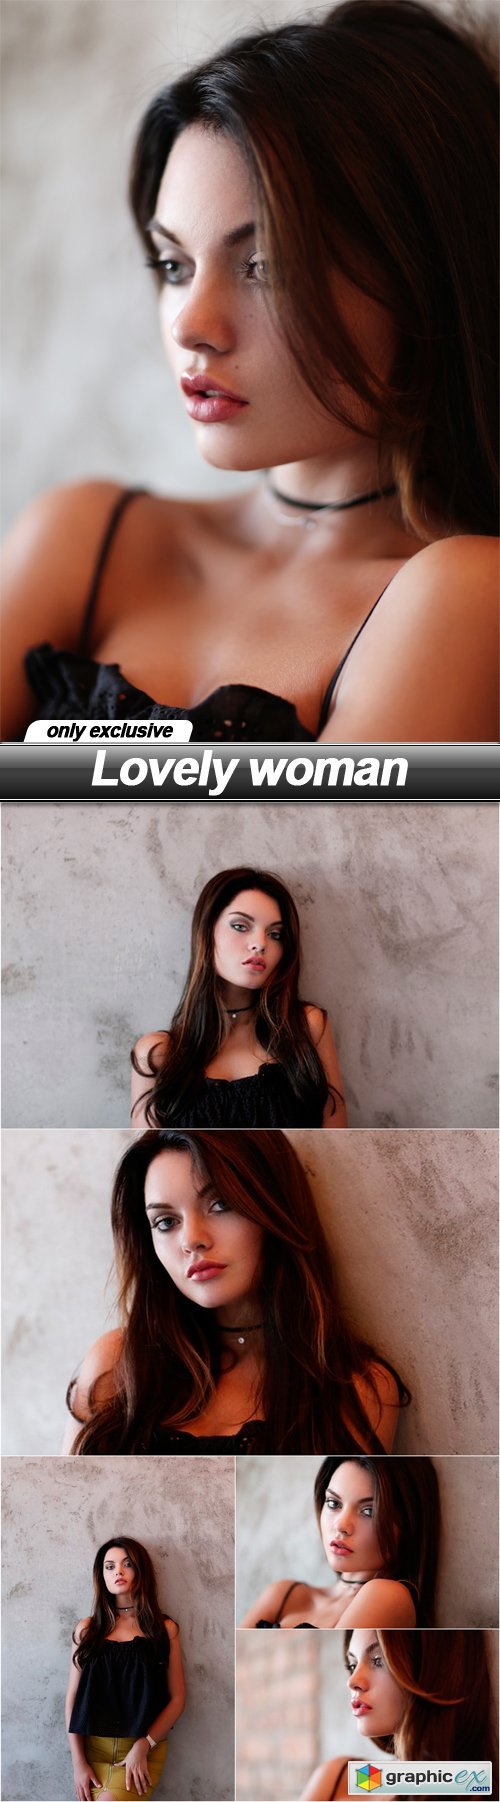 Lovely woman - 6 UHQ JPEG